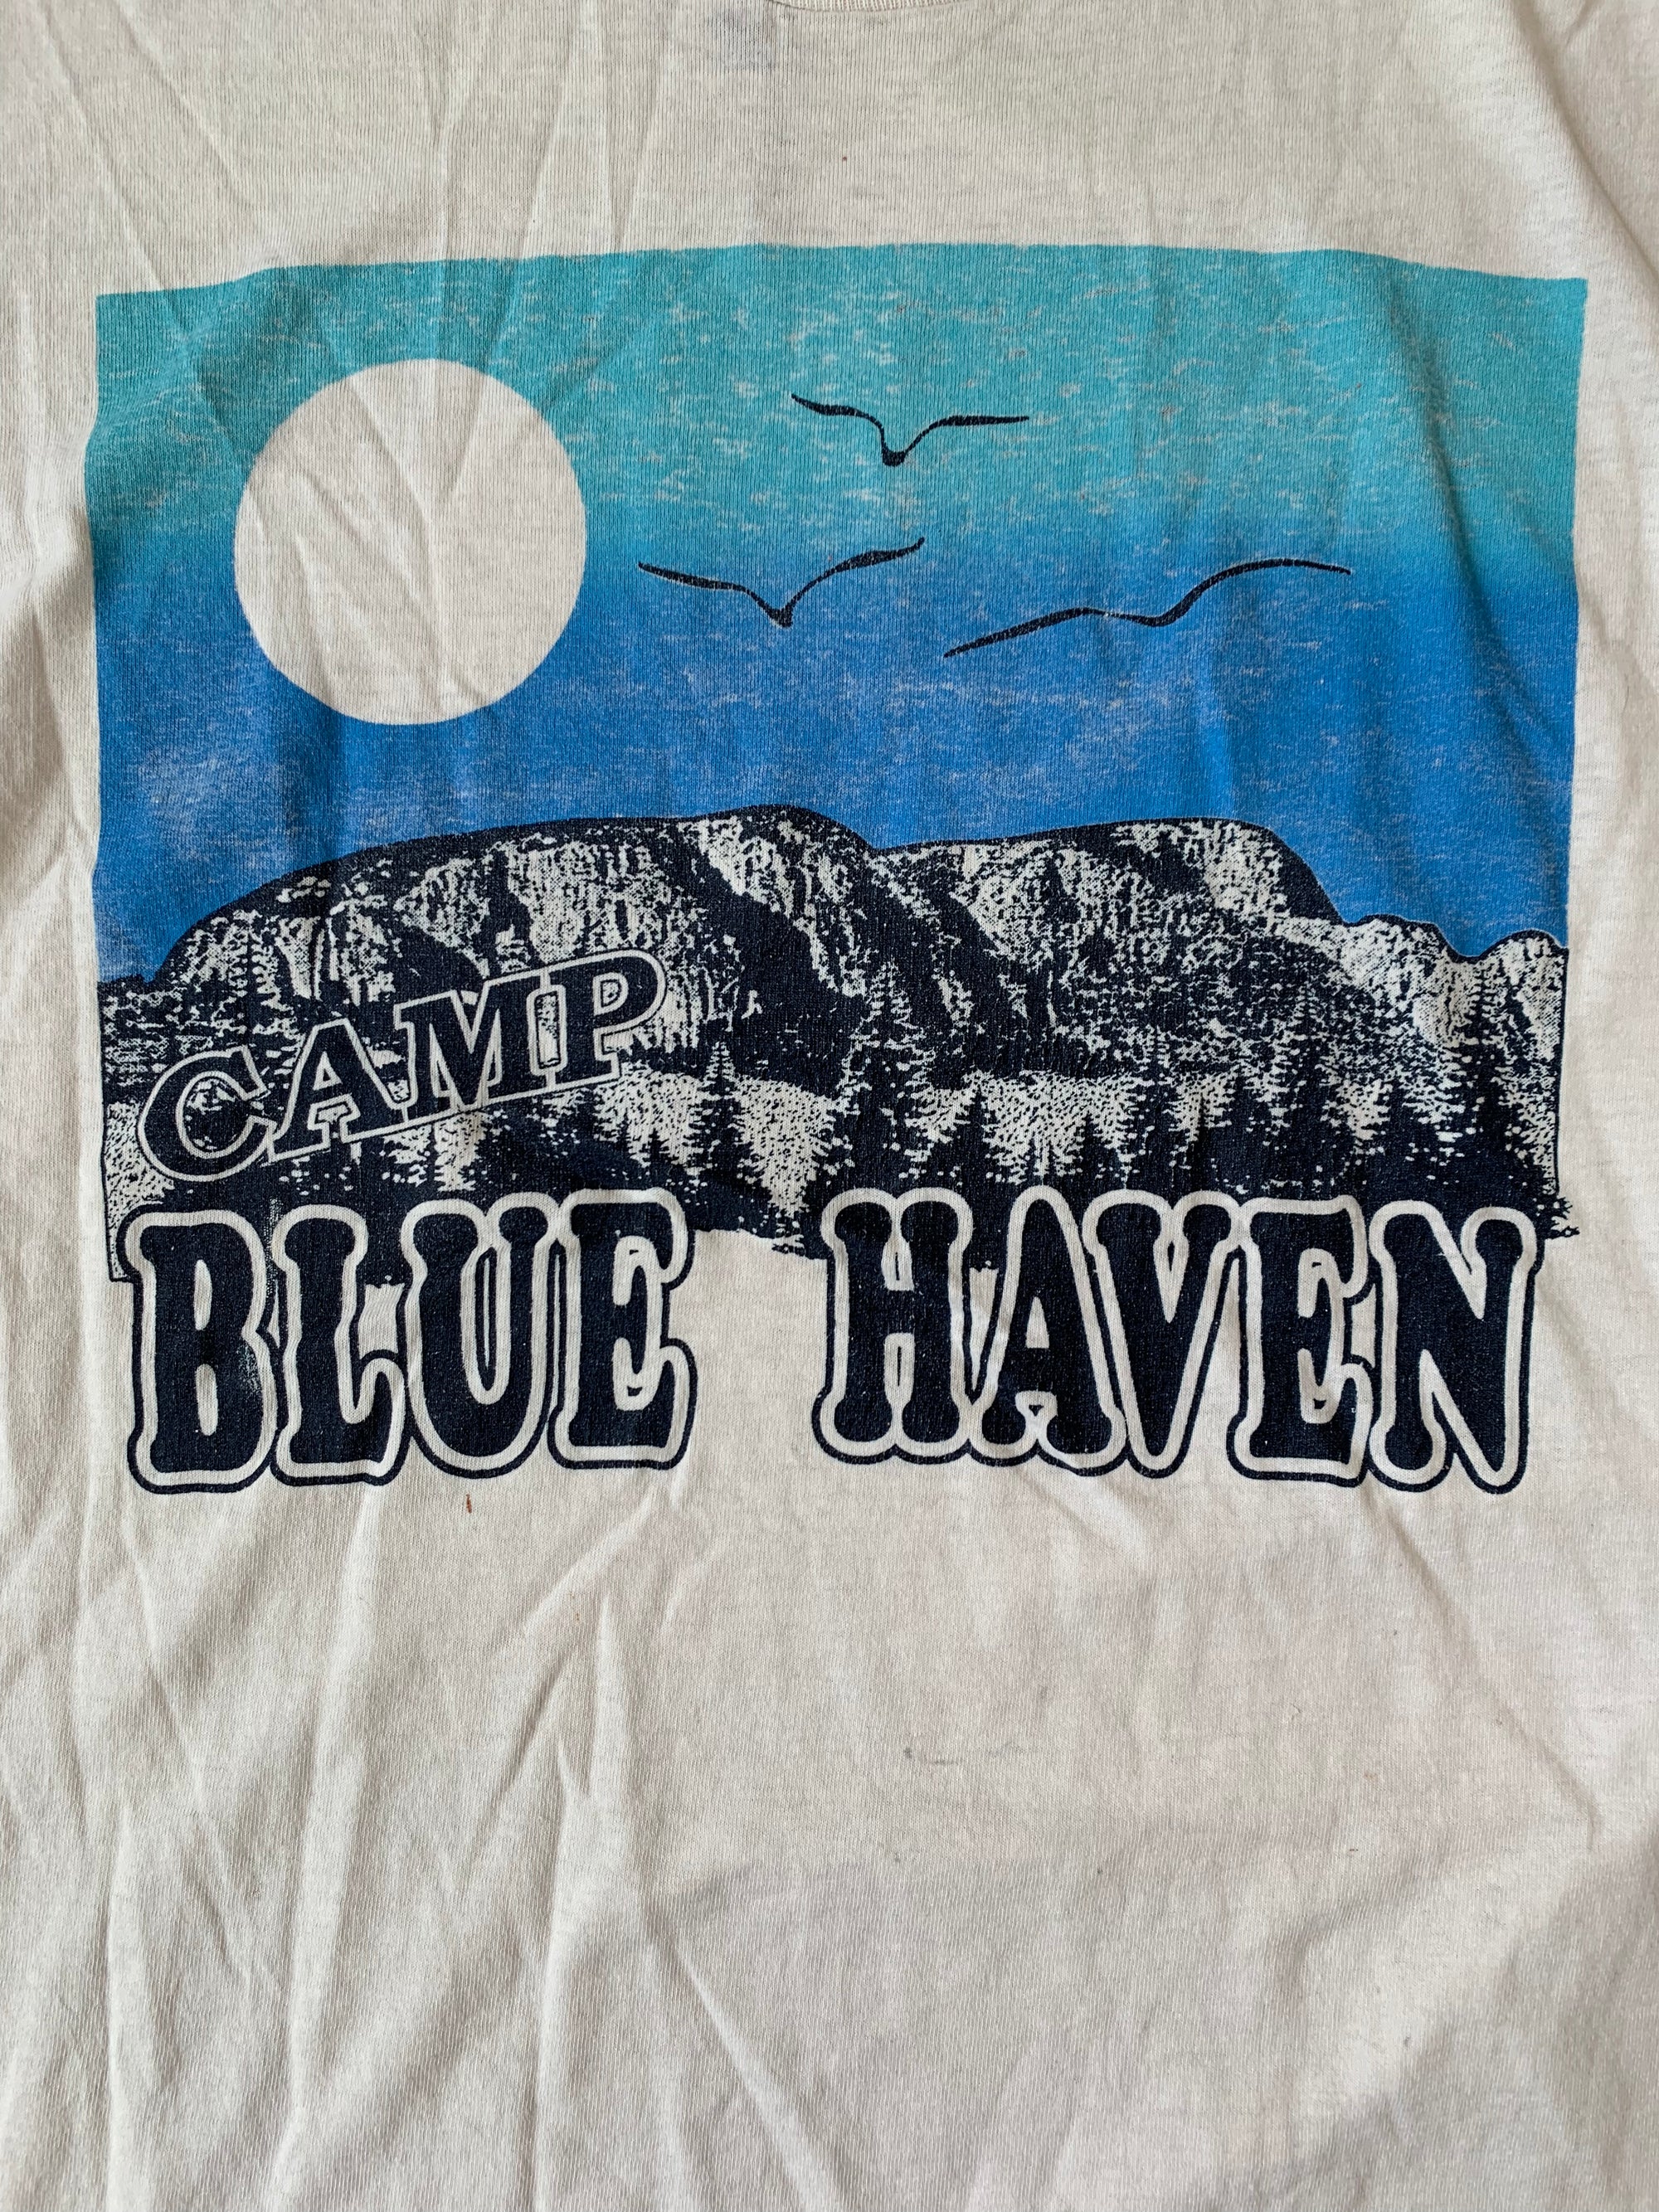 Vintage Camp Blue Haven Tee